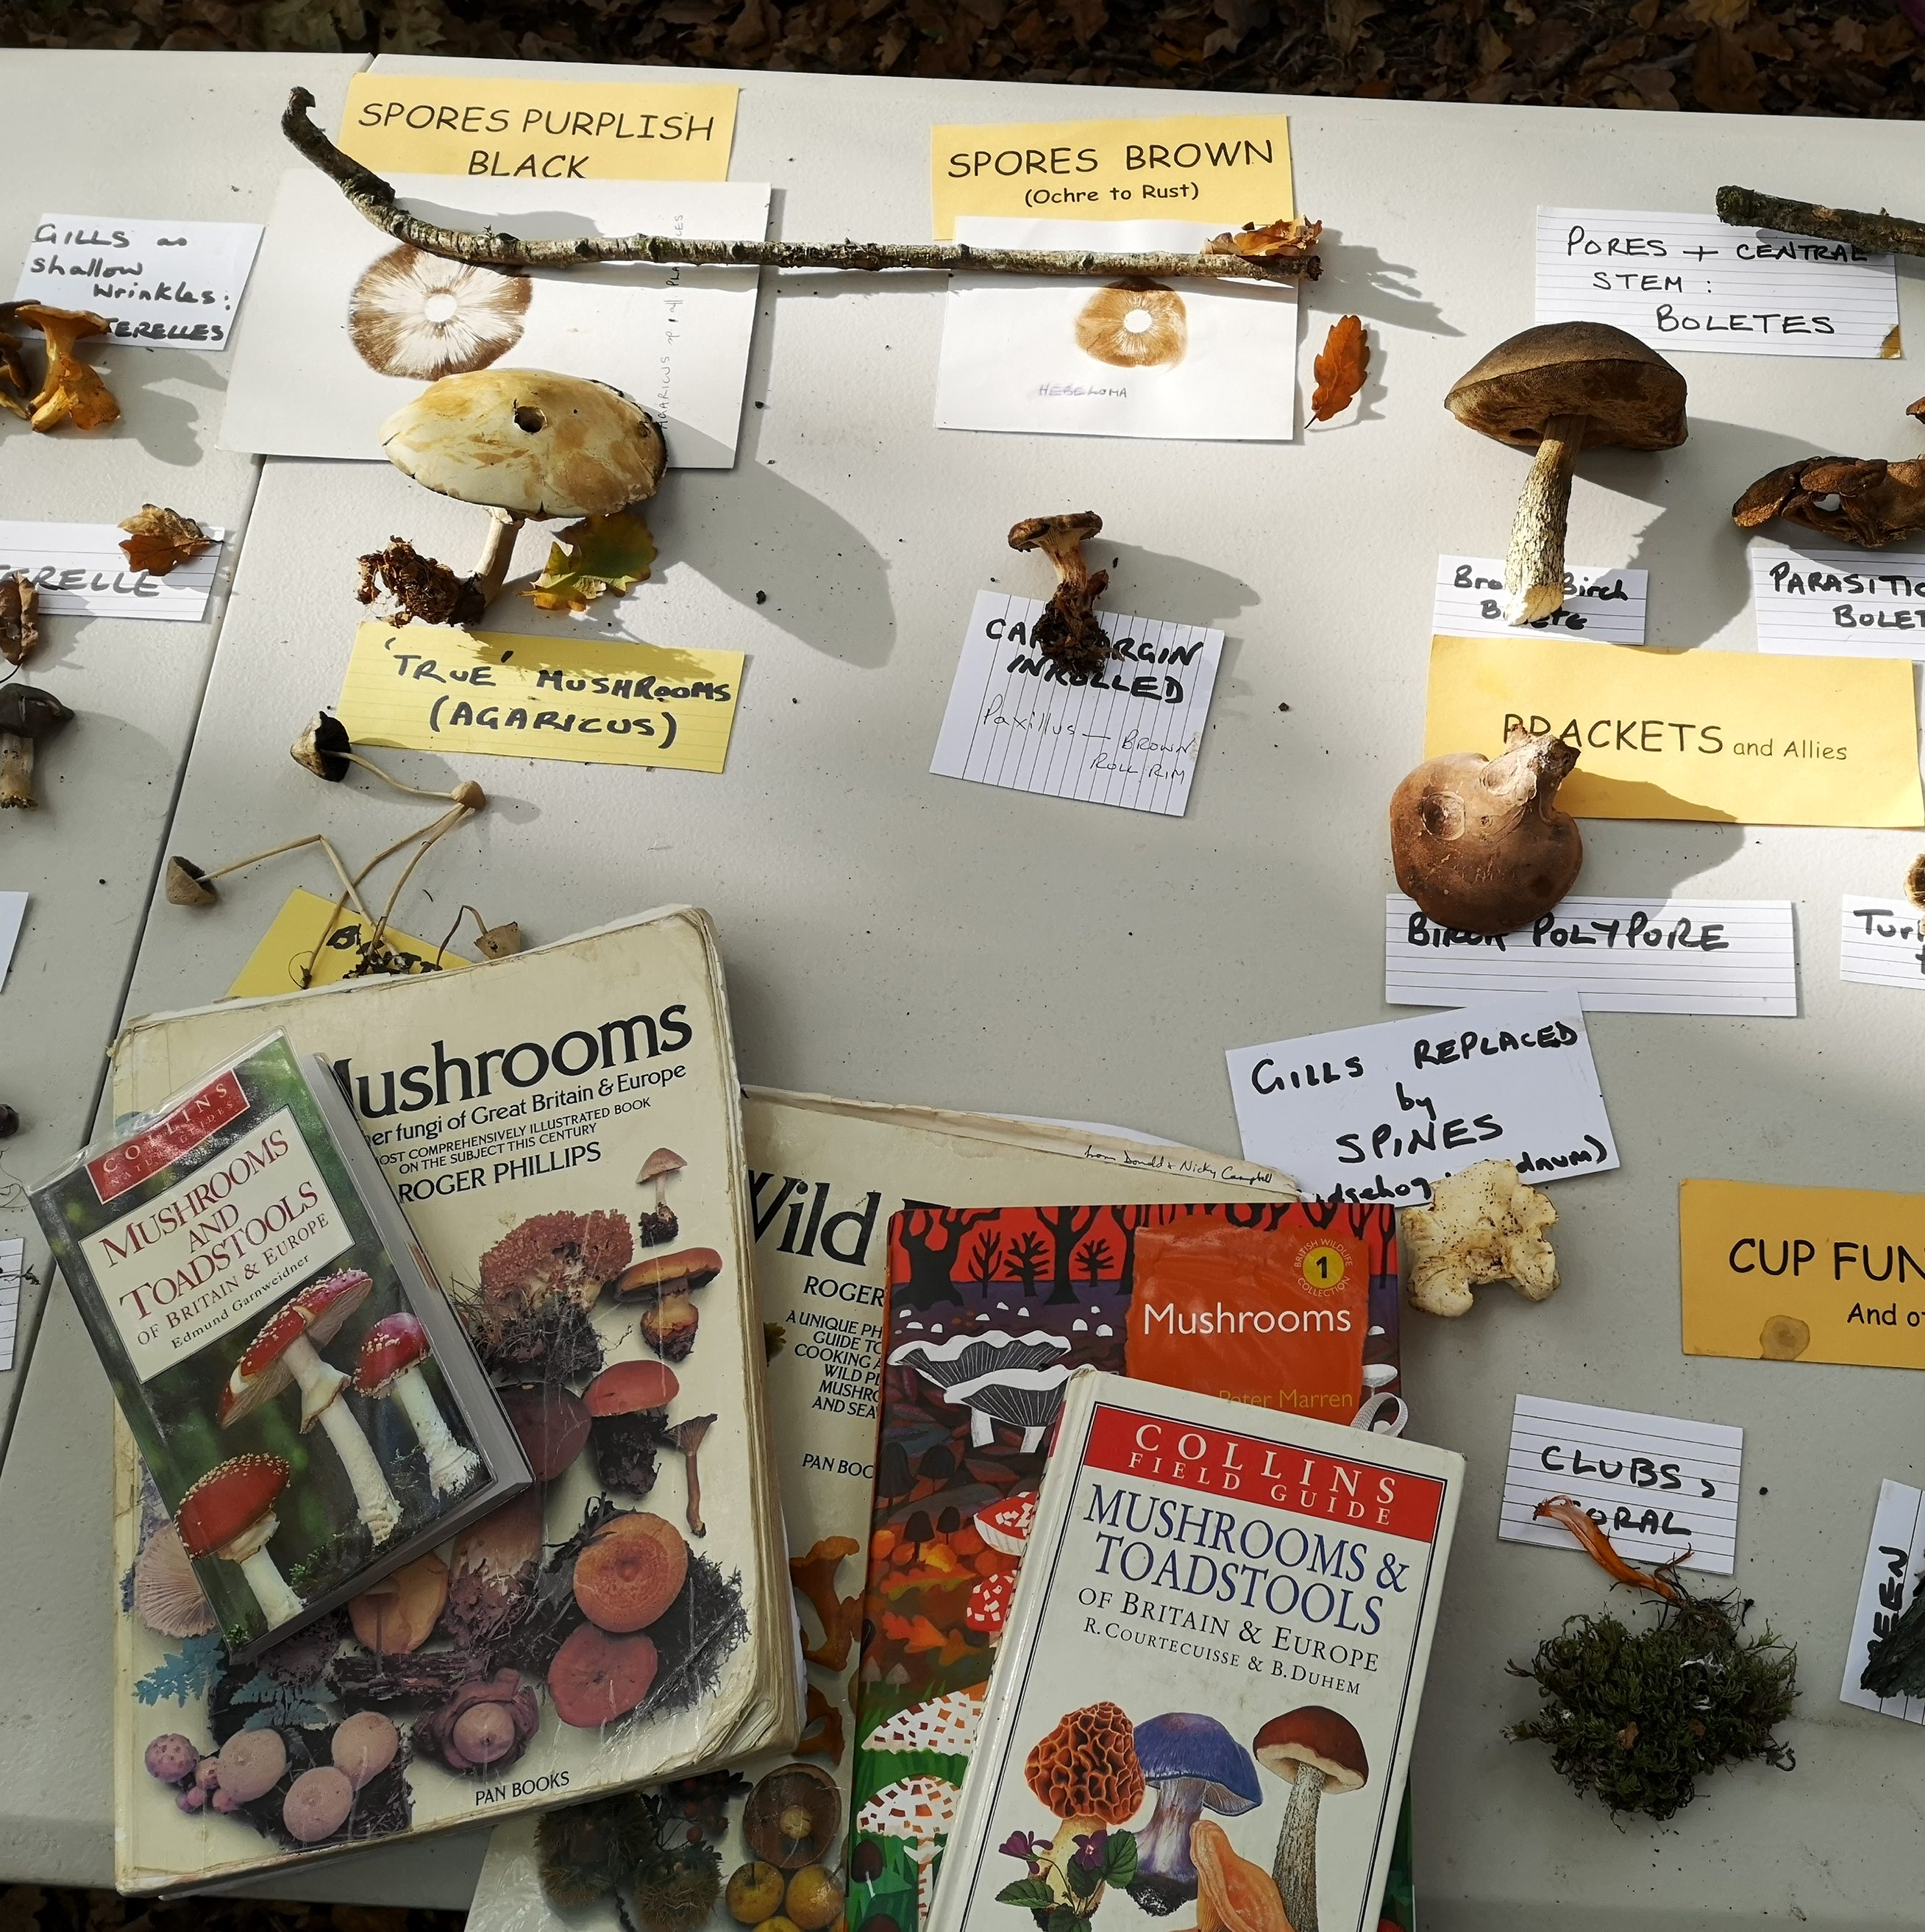 Fungi samples and books